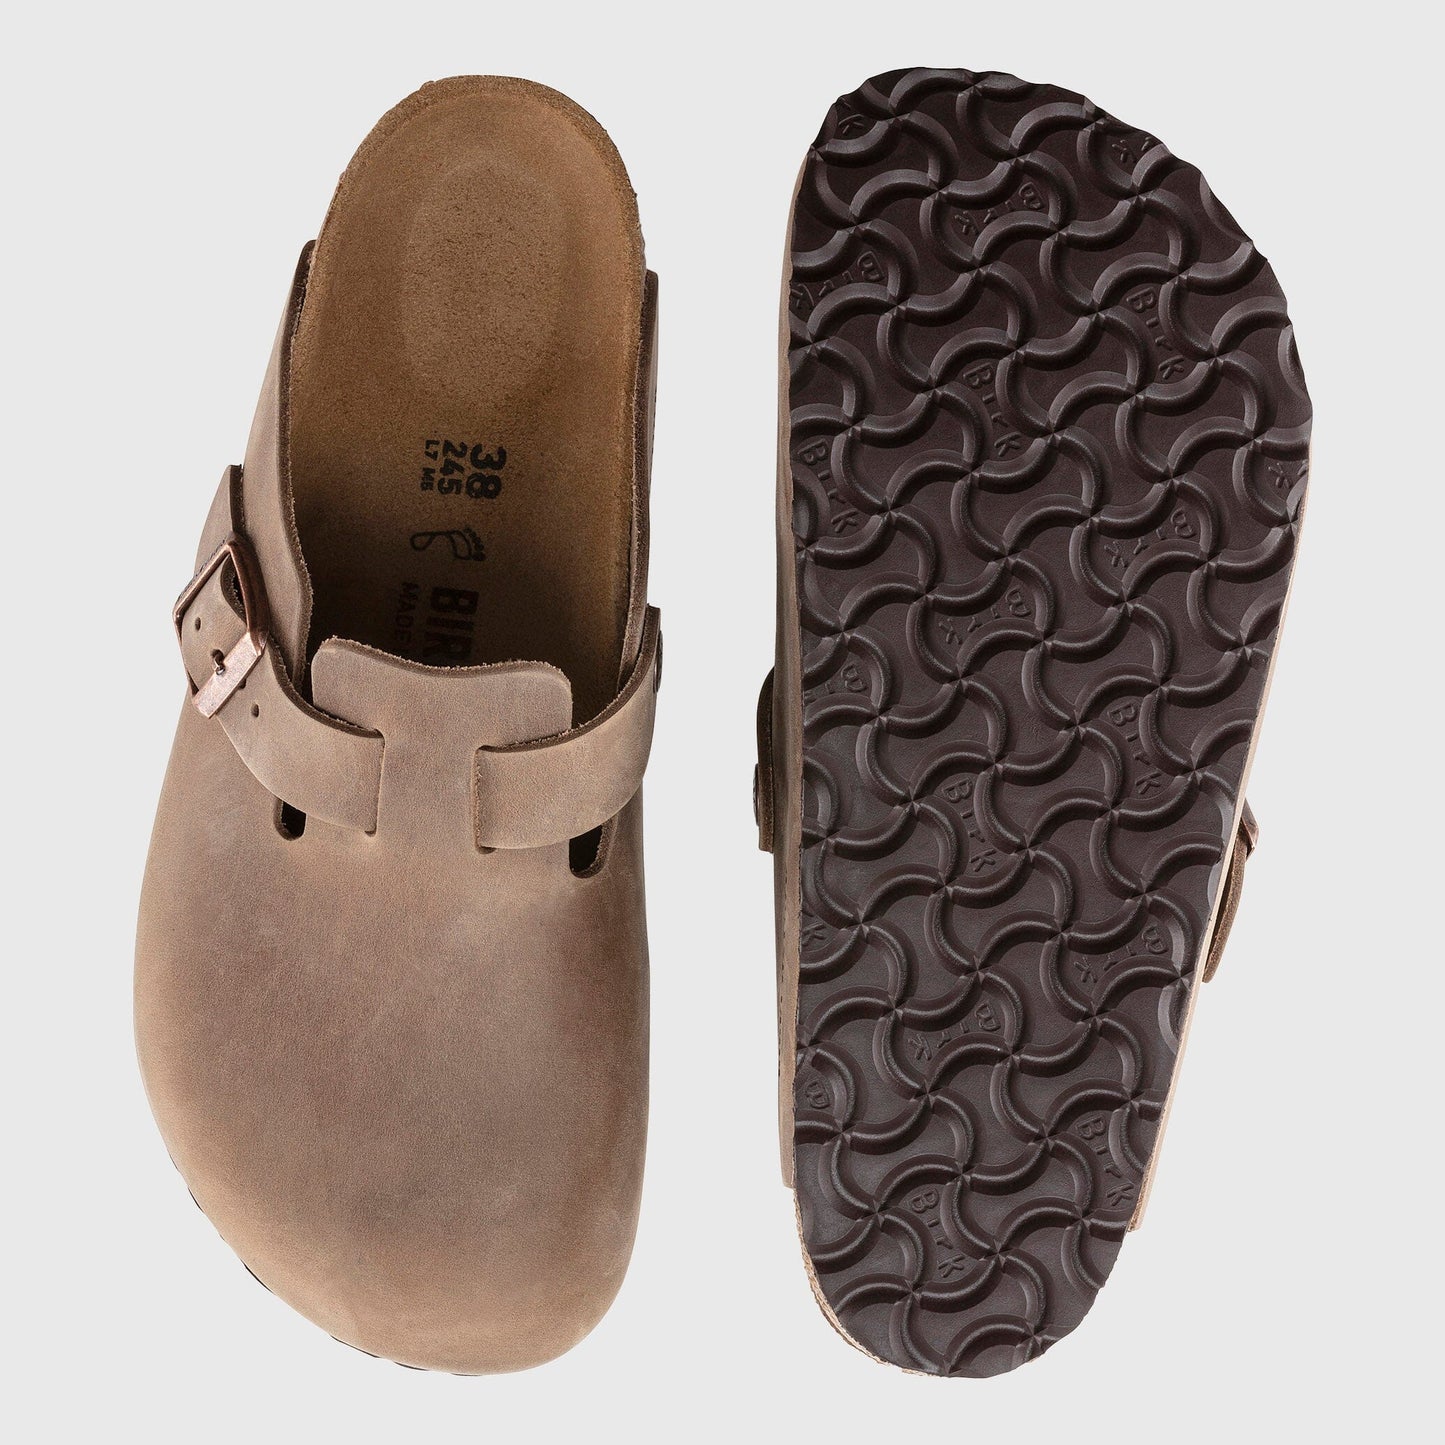 Birkenstock Boston Clog Oiled Leather - Tobacco Brown Shoes Birkenstock 